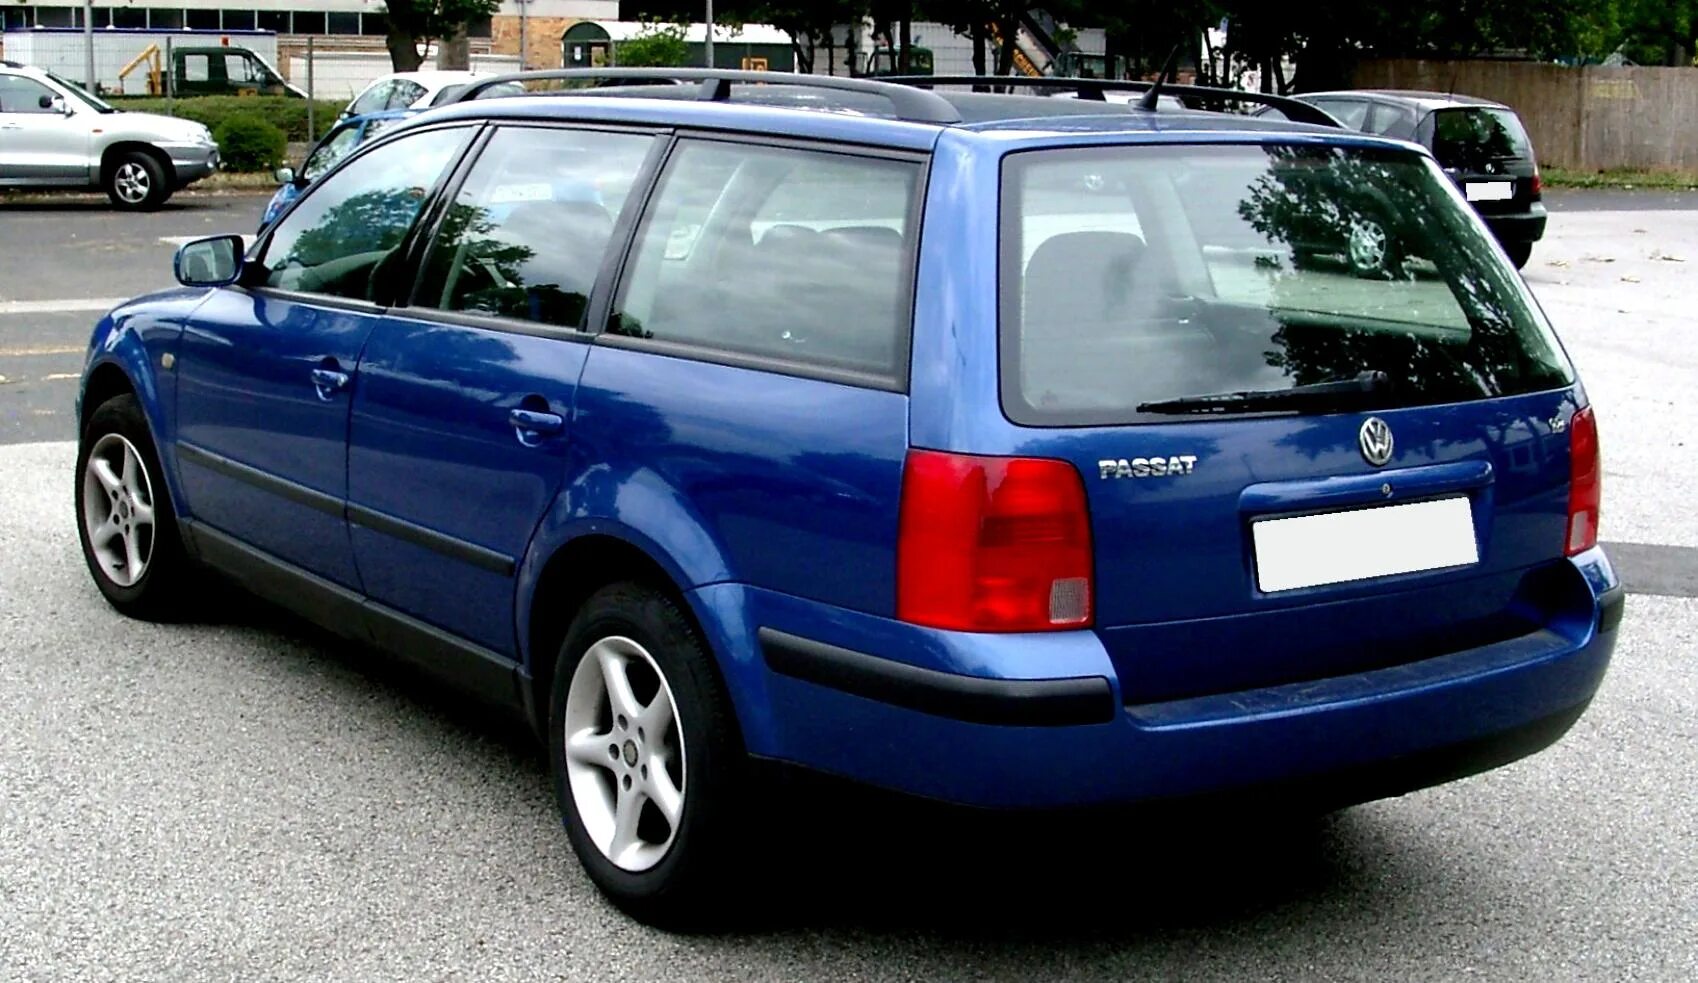 B 5 b2 7. VW Passat b5 variant. Фольксваген Пассат в5 универсал. VW Passat b5 универсал. VW Passat variant b5 1999.